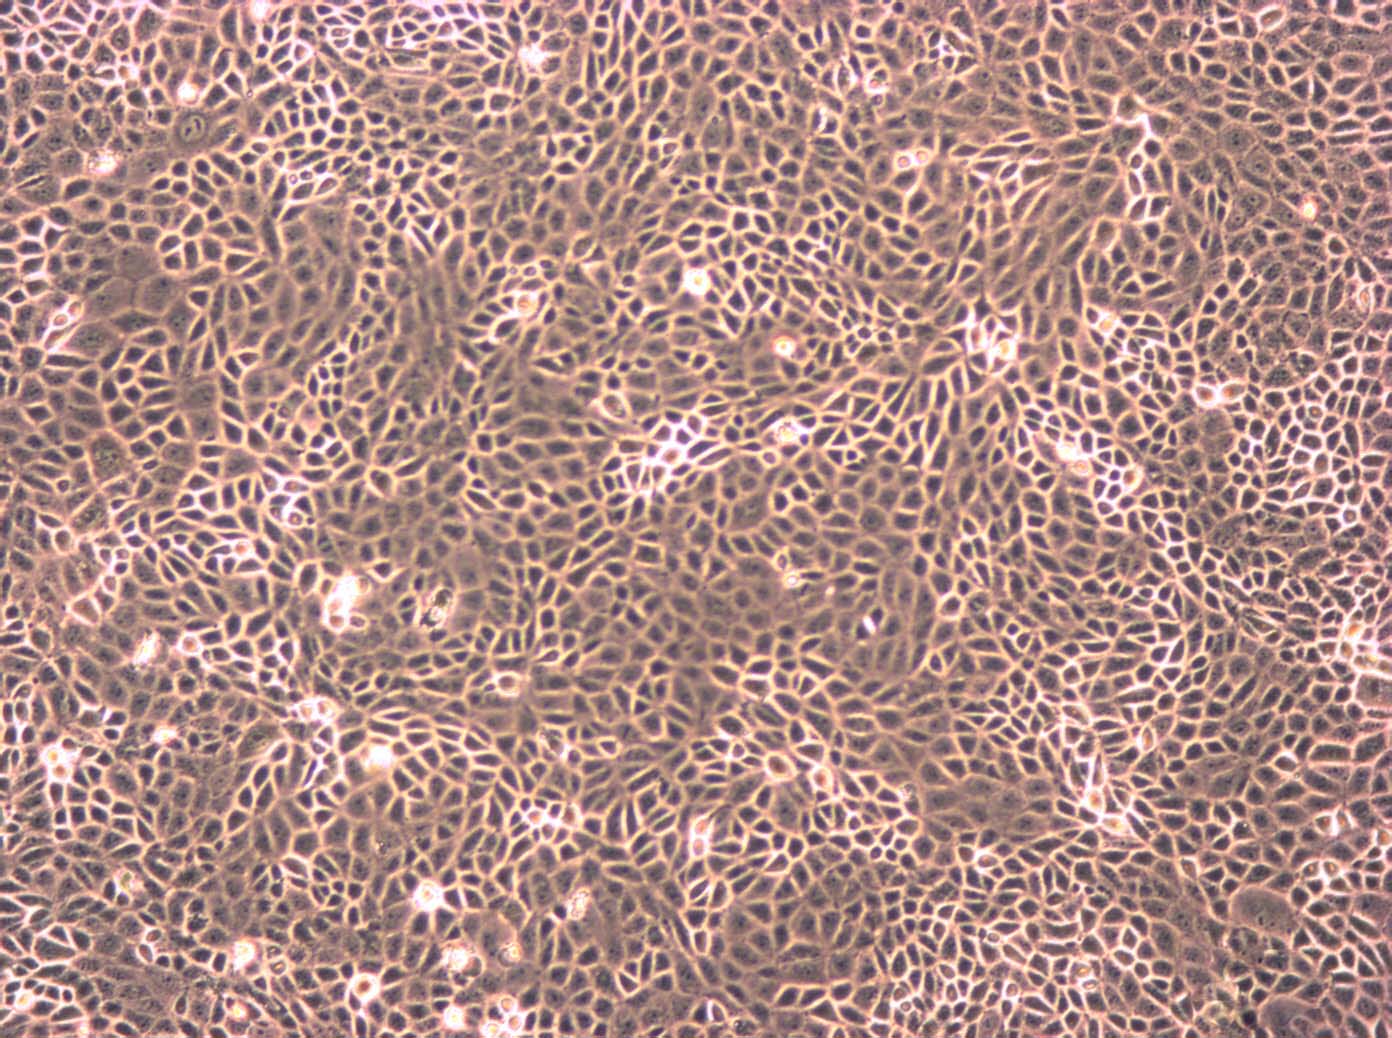 T98 Adherent人脑胶质细胞瘤细胞系